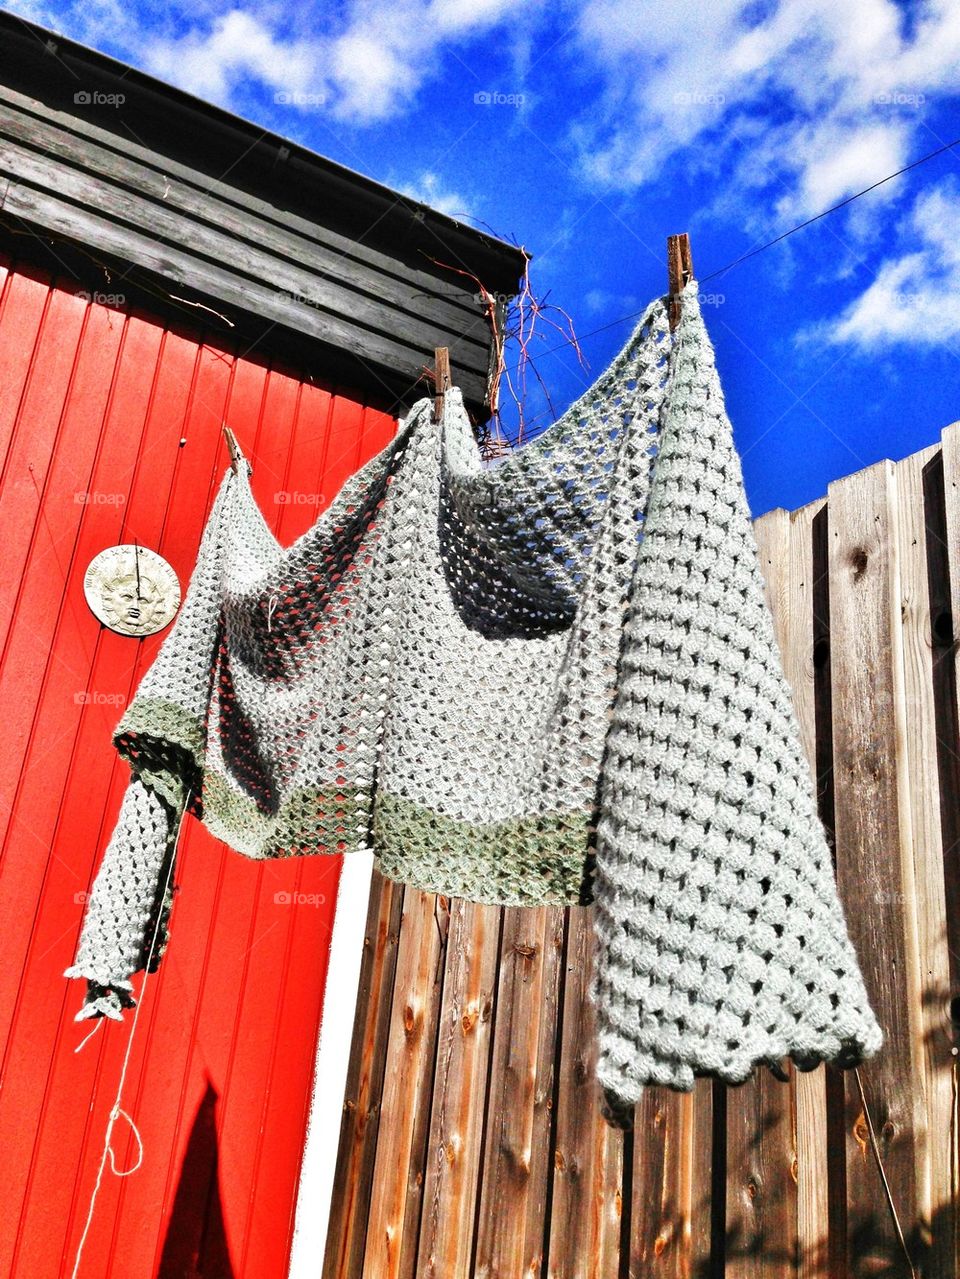 crocheted shawl against a blue sky